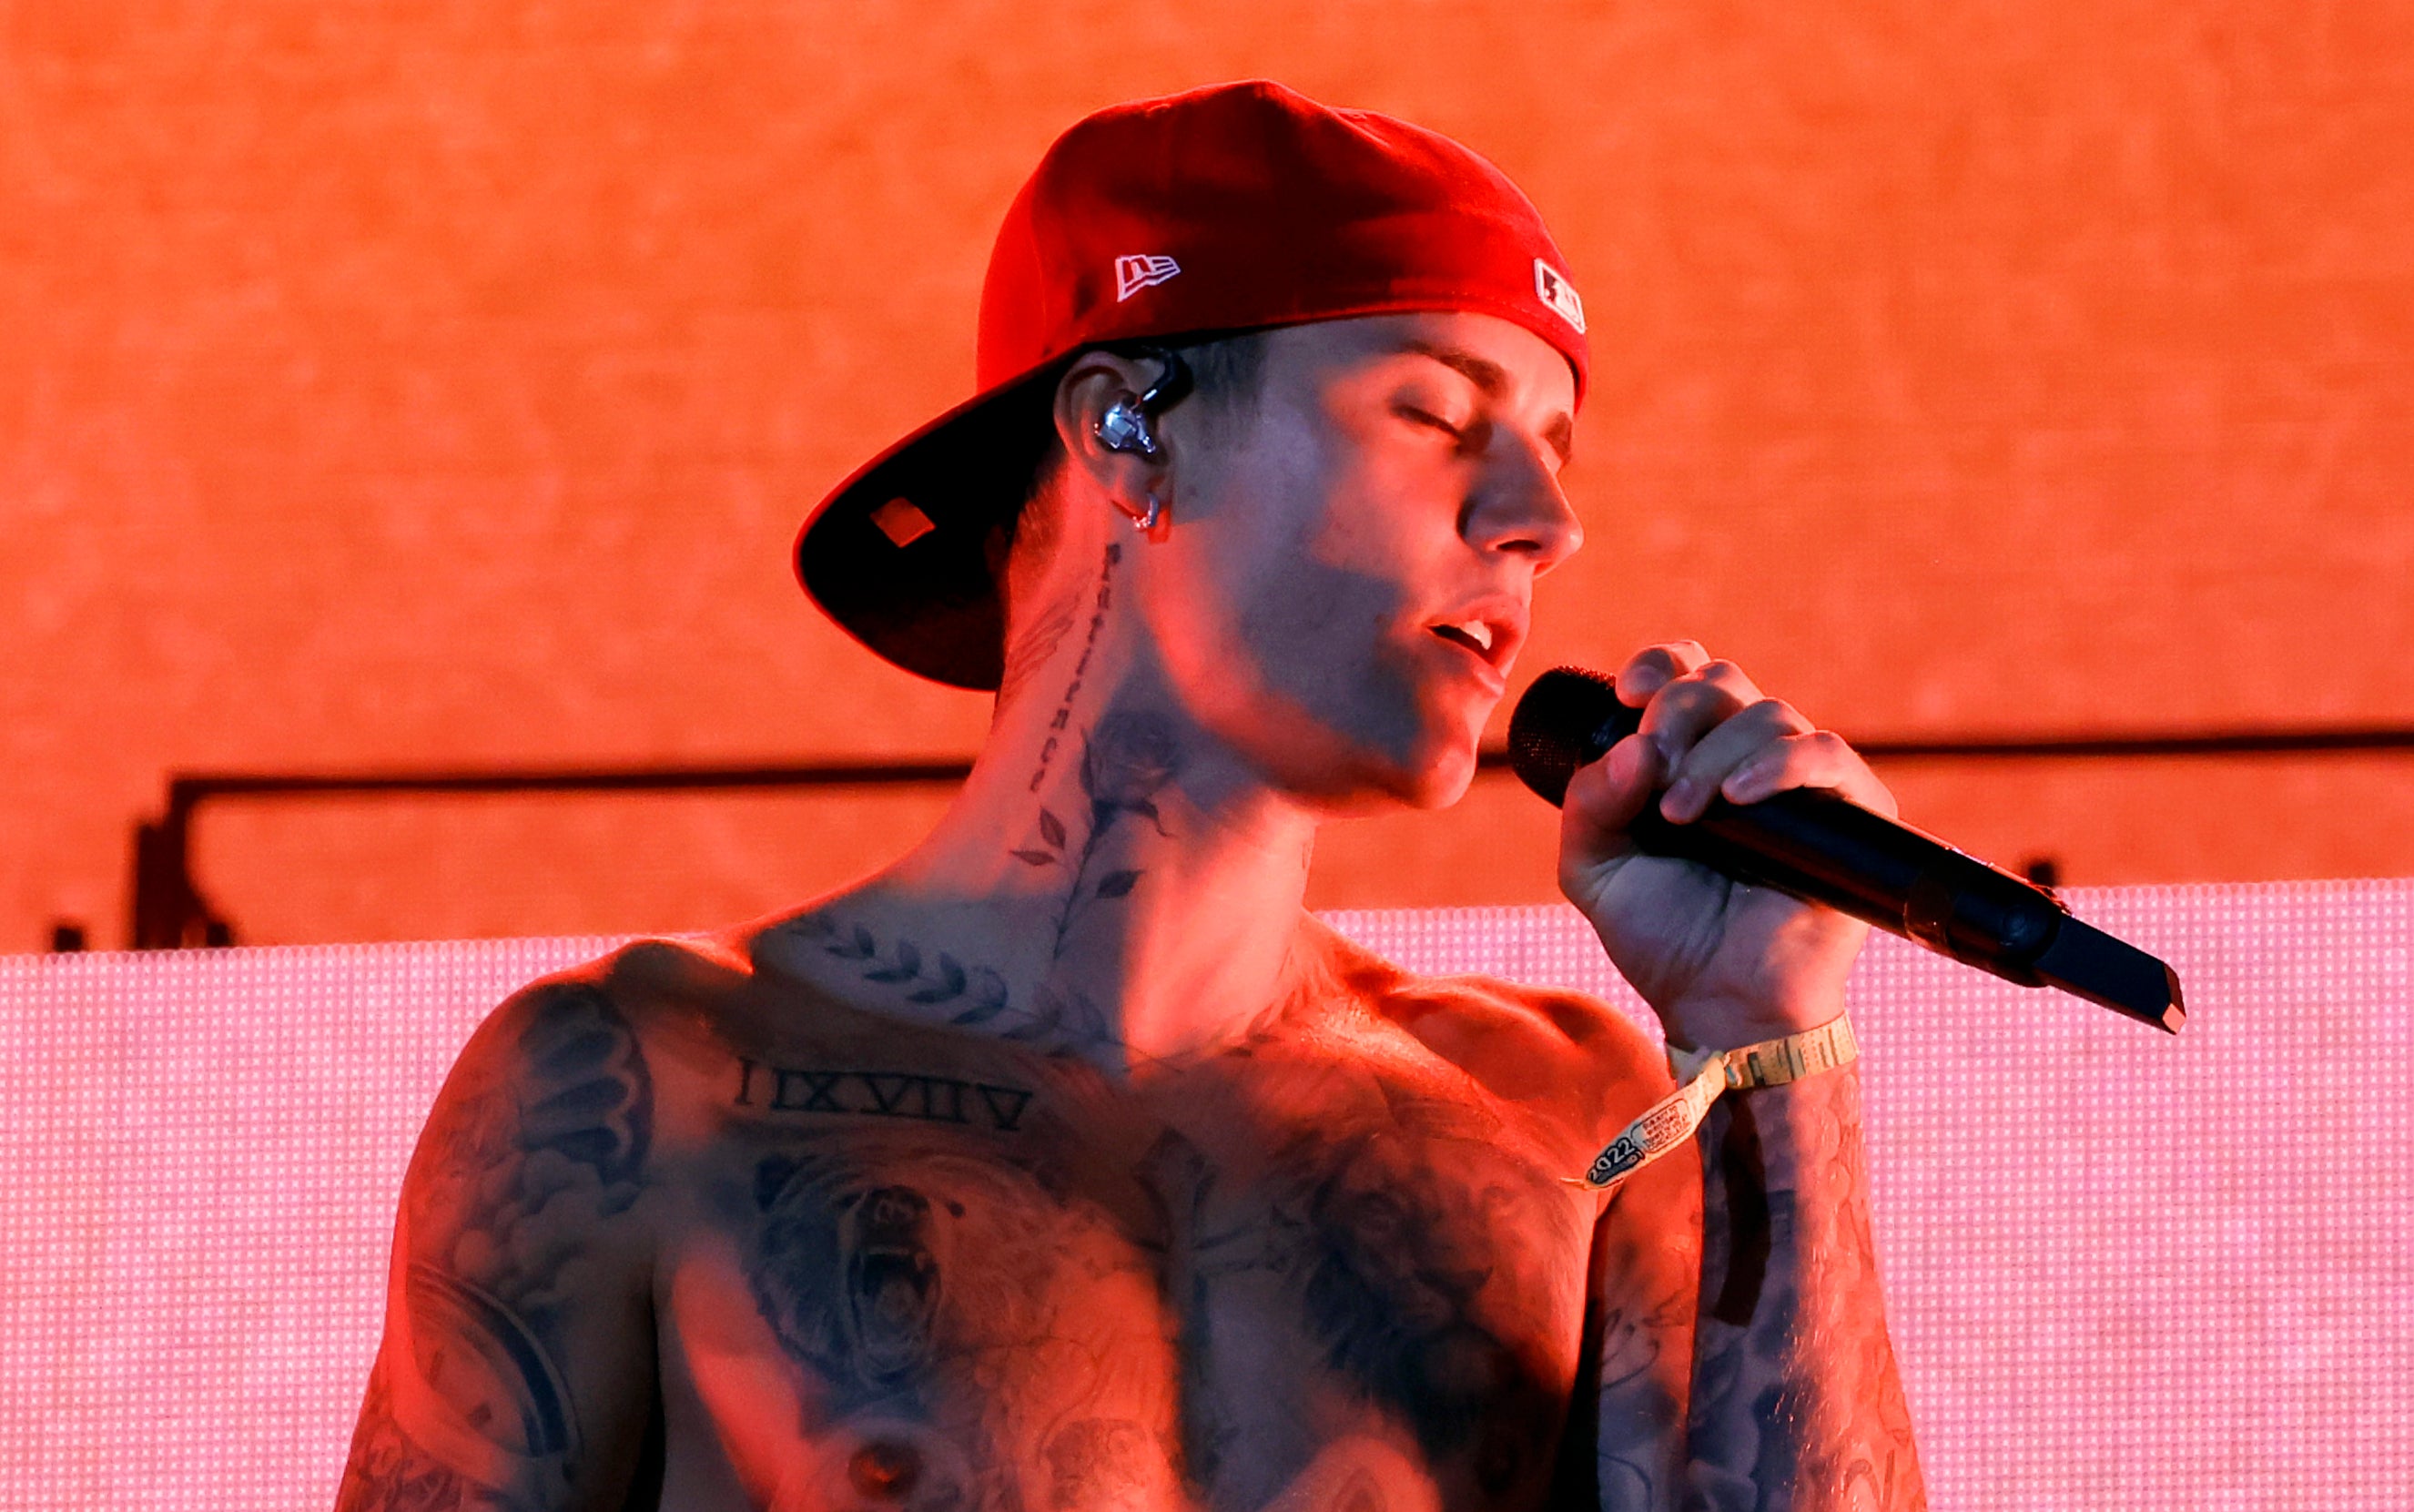 Bieber on stage at Coachella 2022